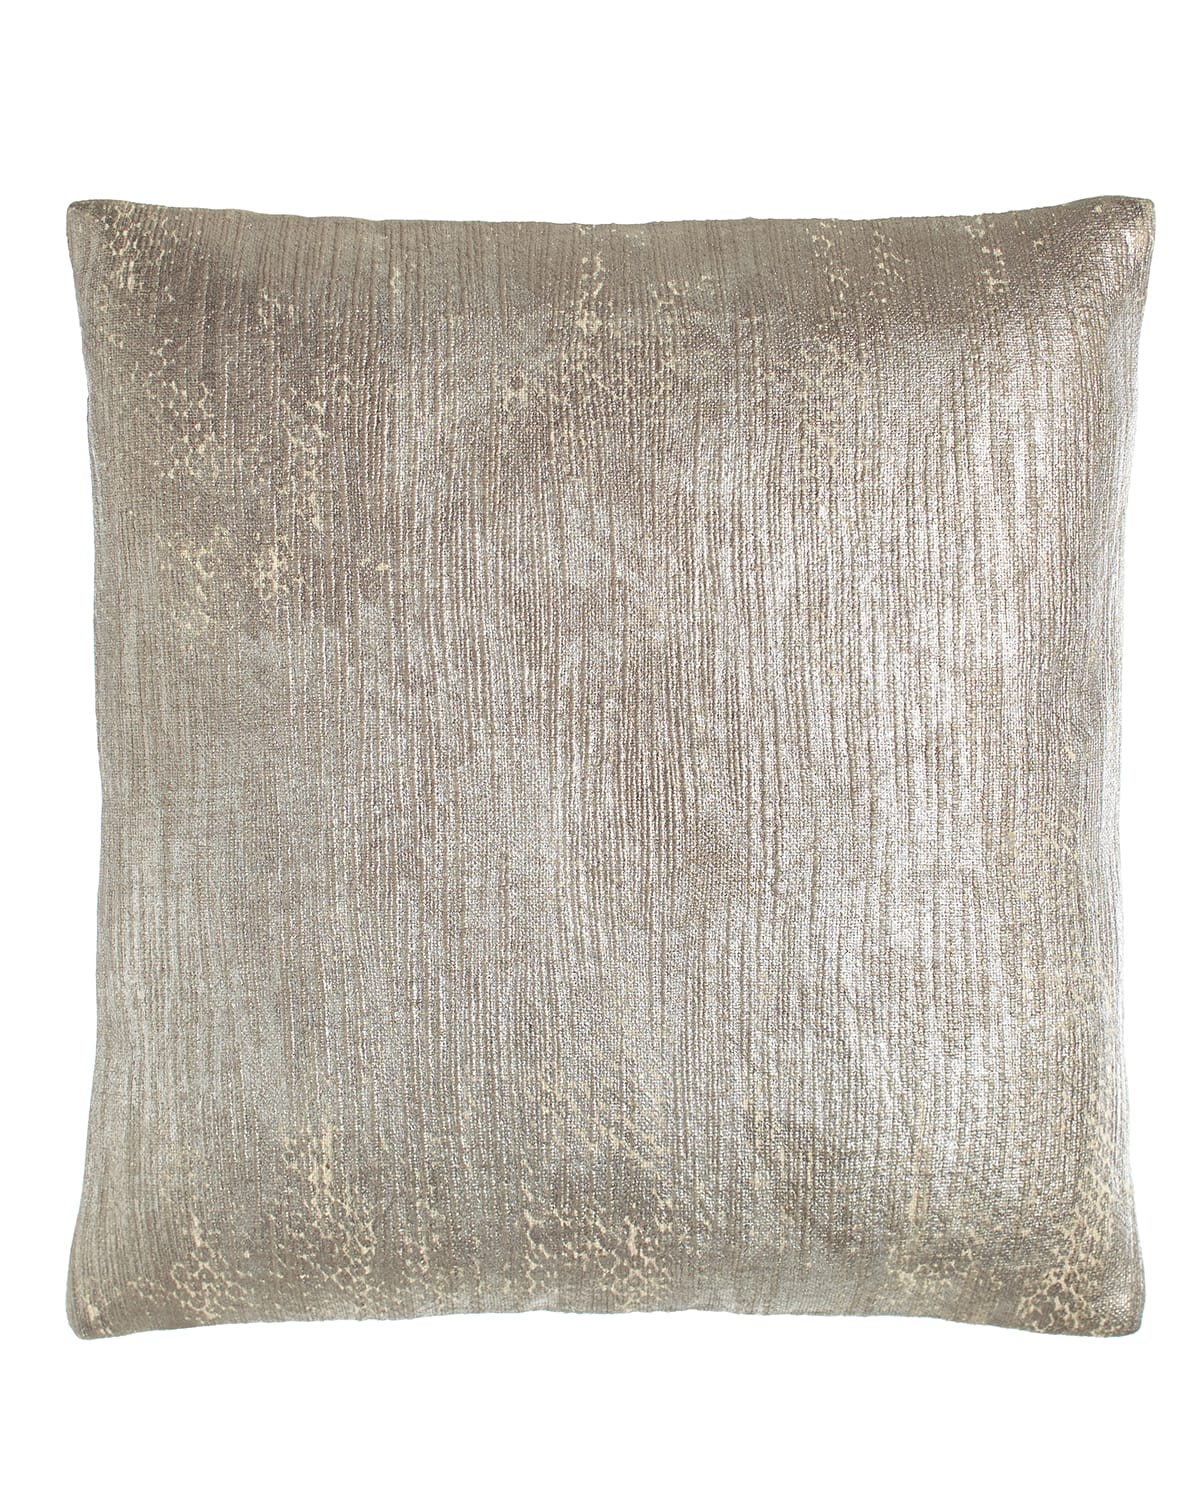 Image Donna Karan Home Fuse Metallic-Print Pillow, 16"Sq.